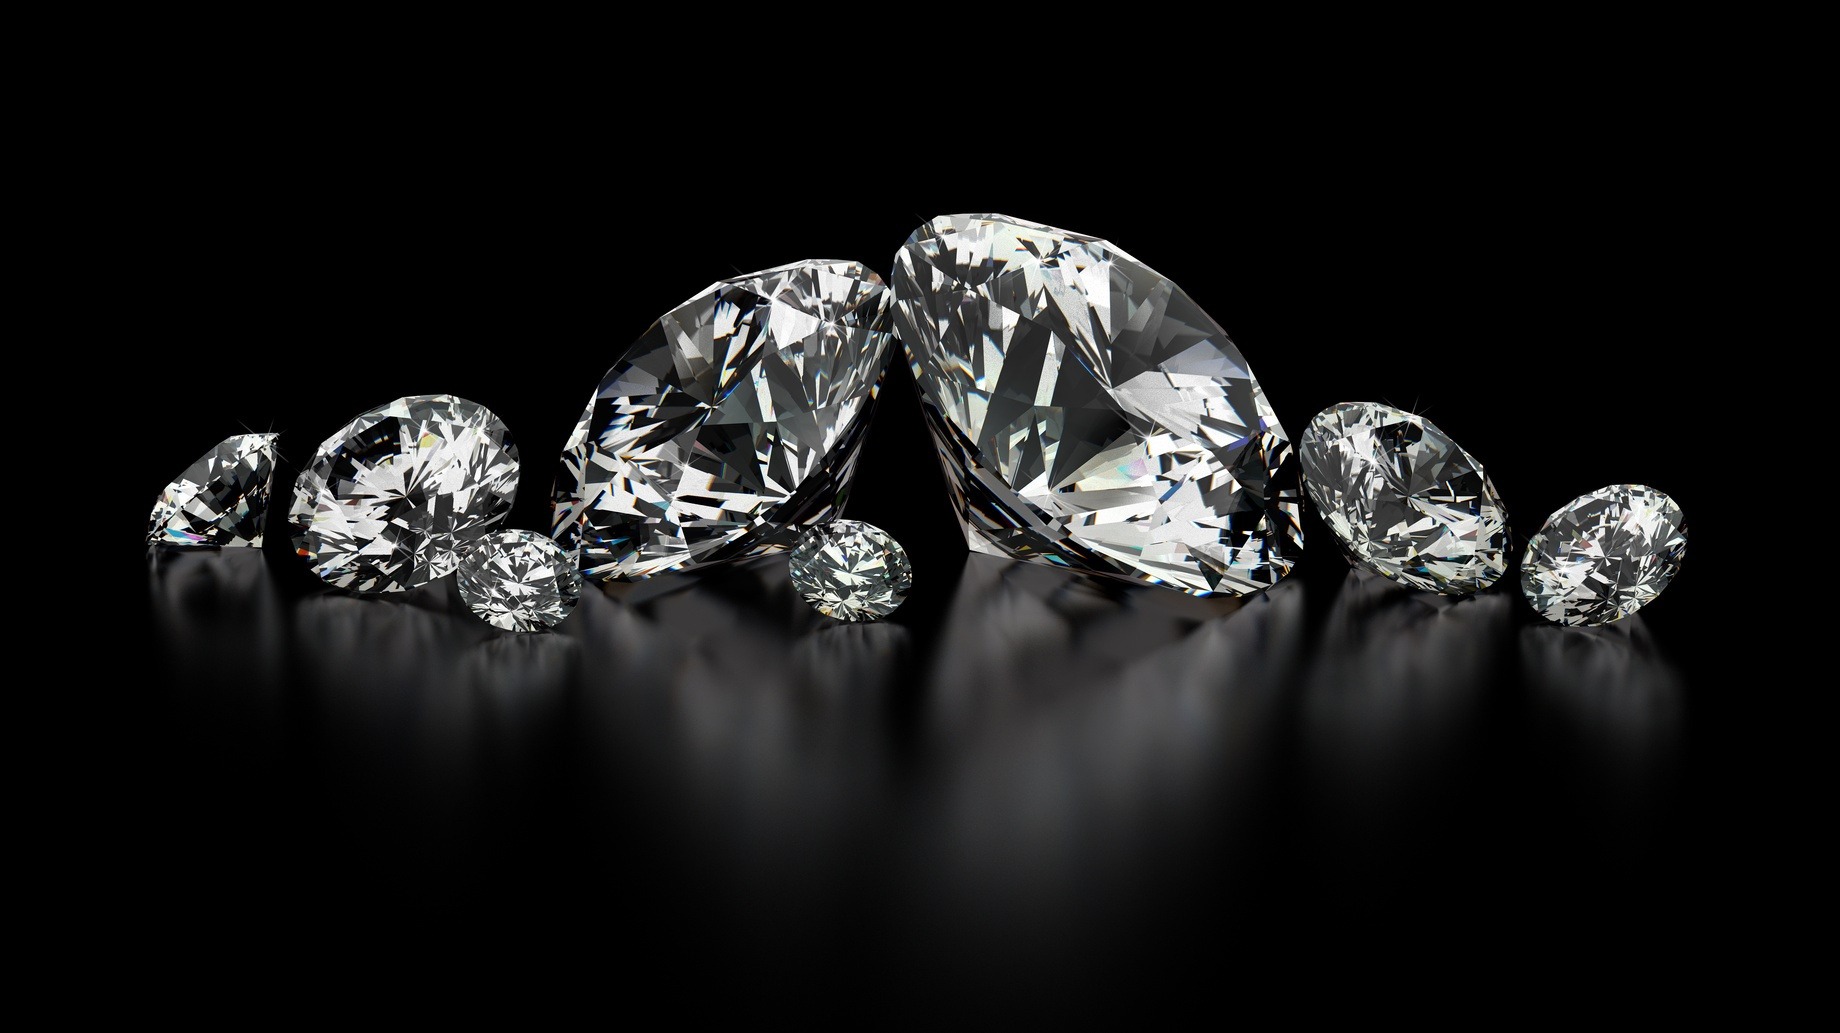 4 cs of diamonds: the natural ID